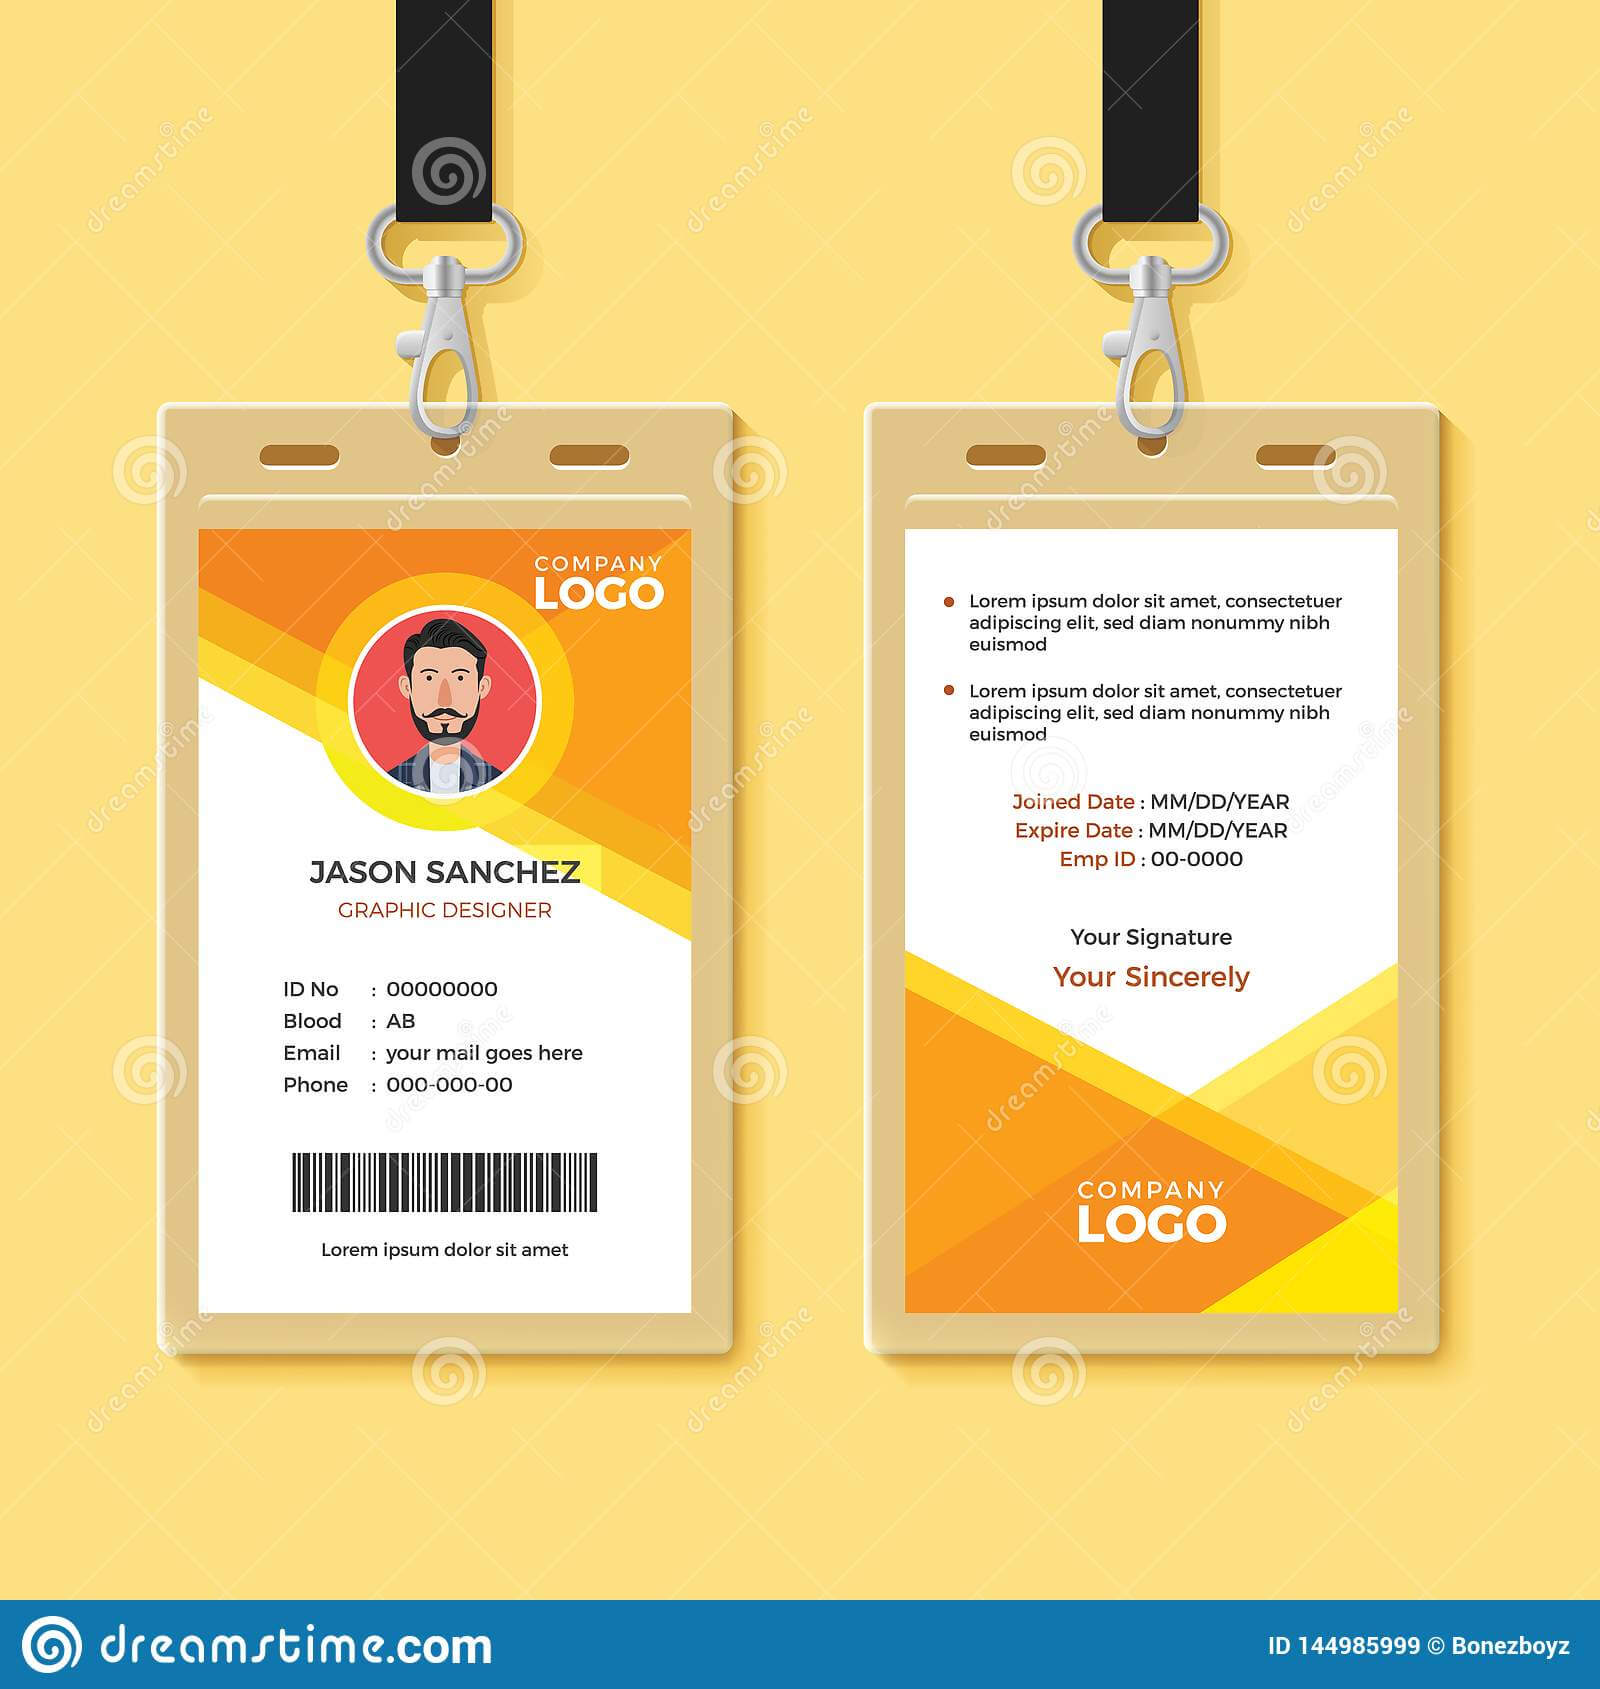 Simple Orange Graphic Id Card Design Template Stock Vector Inside Company Id Card Design Template